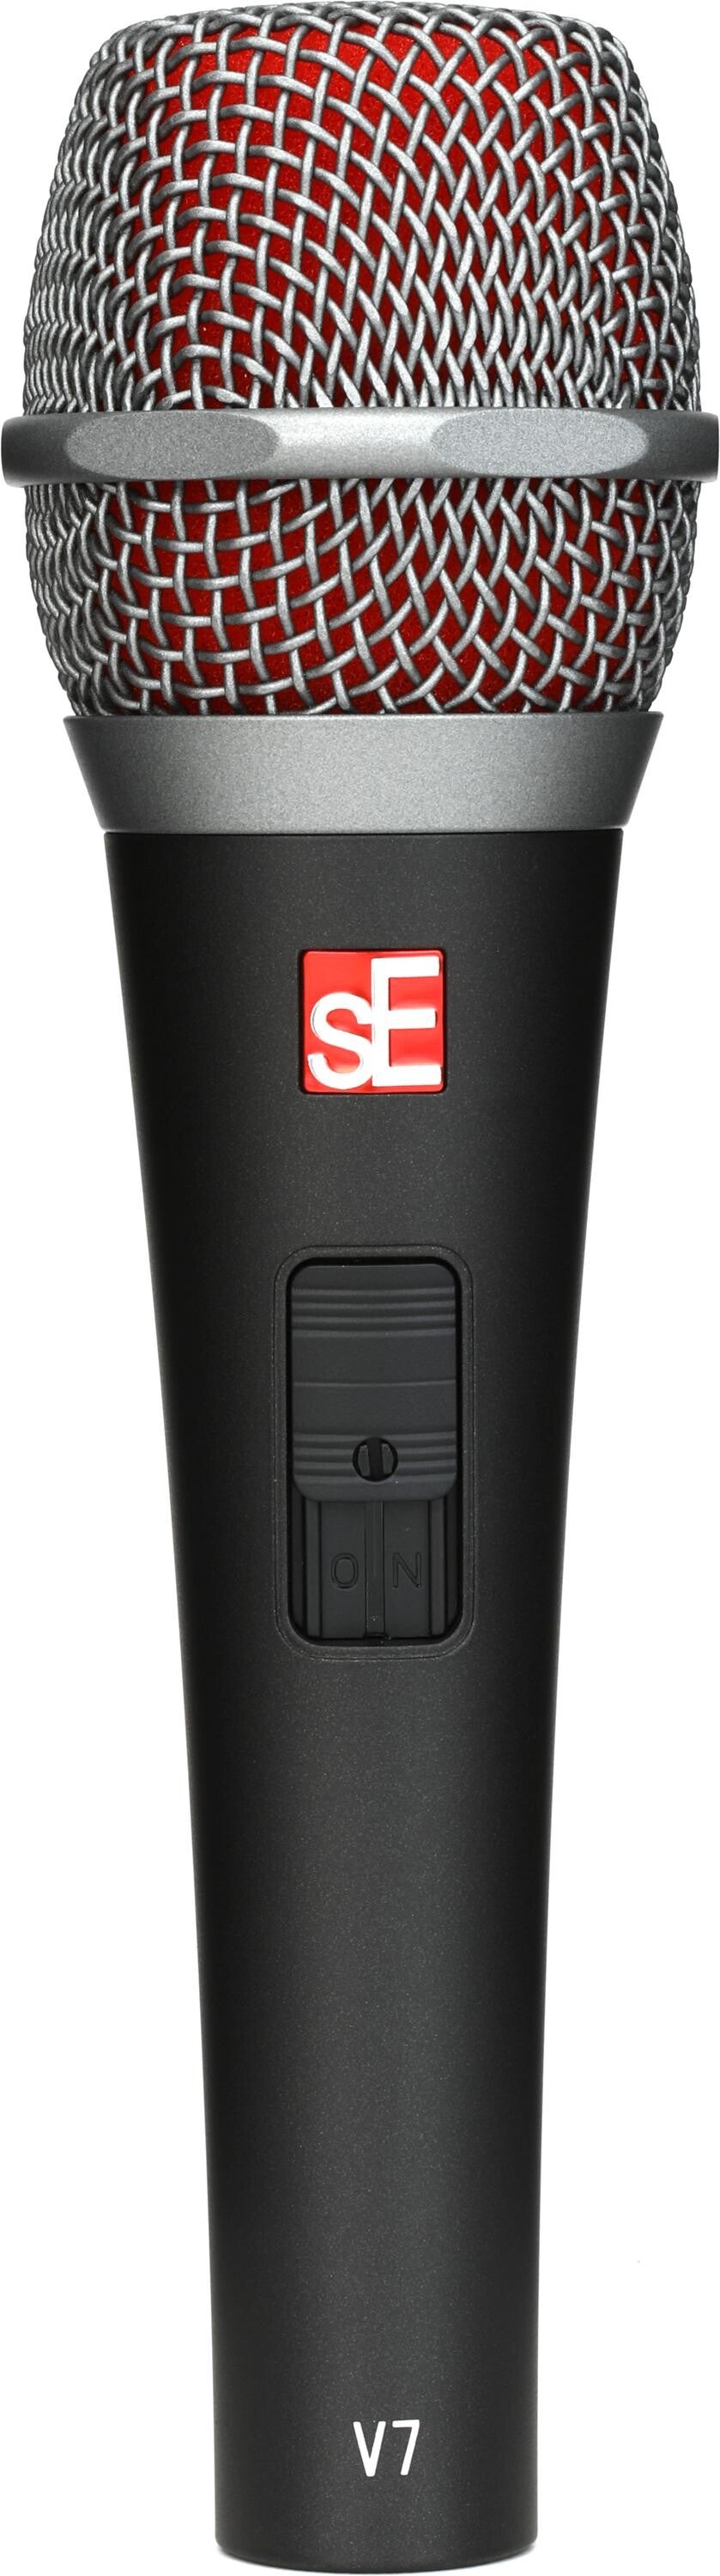 Bundled Item: sE Electronics V7 Switch Supercardioid Dynamic Handheld Vocal Microphone